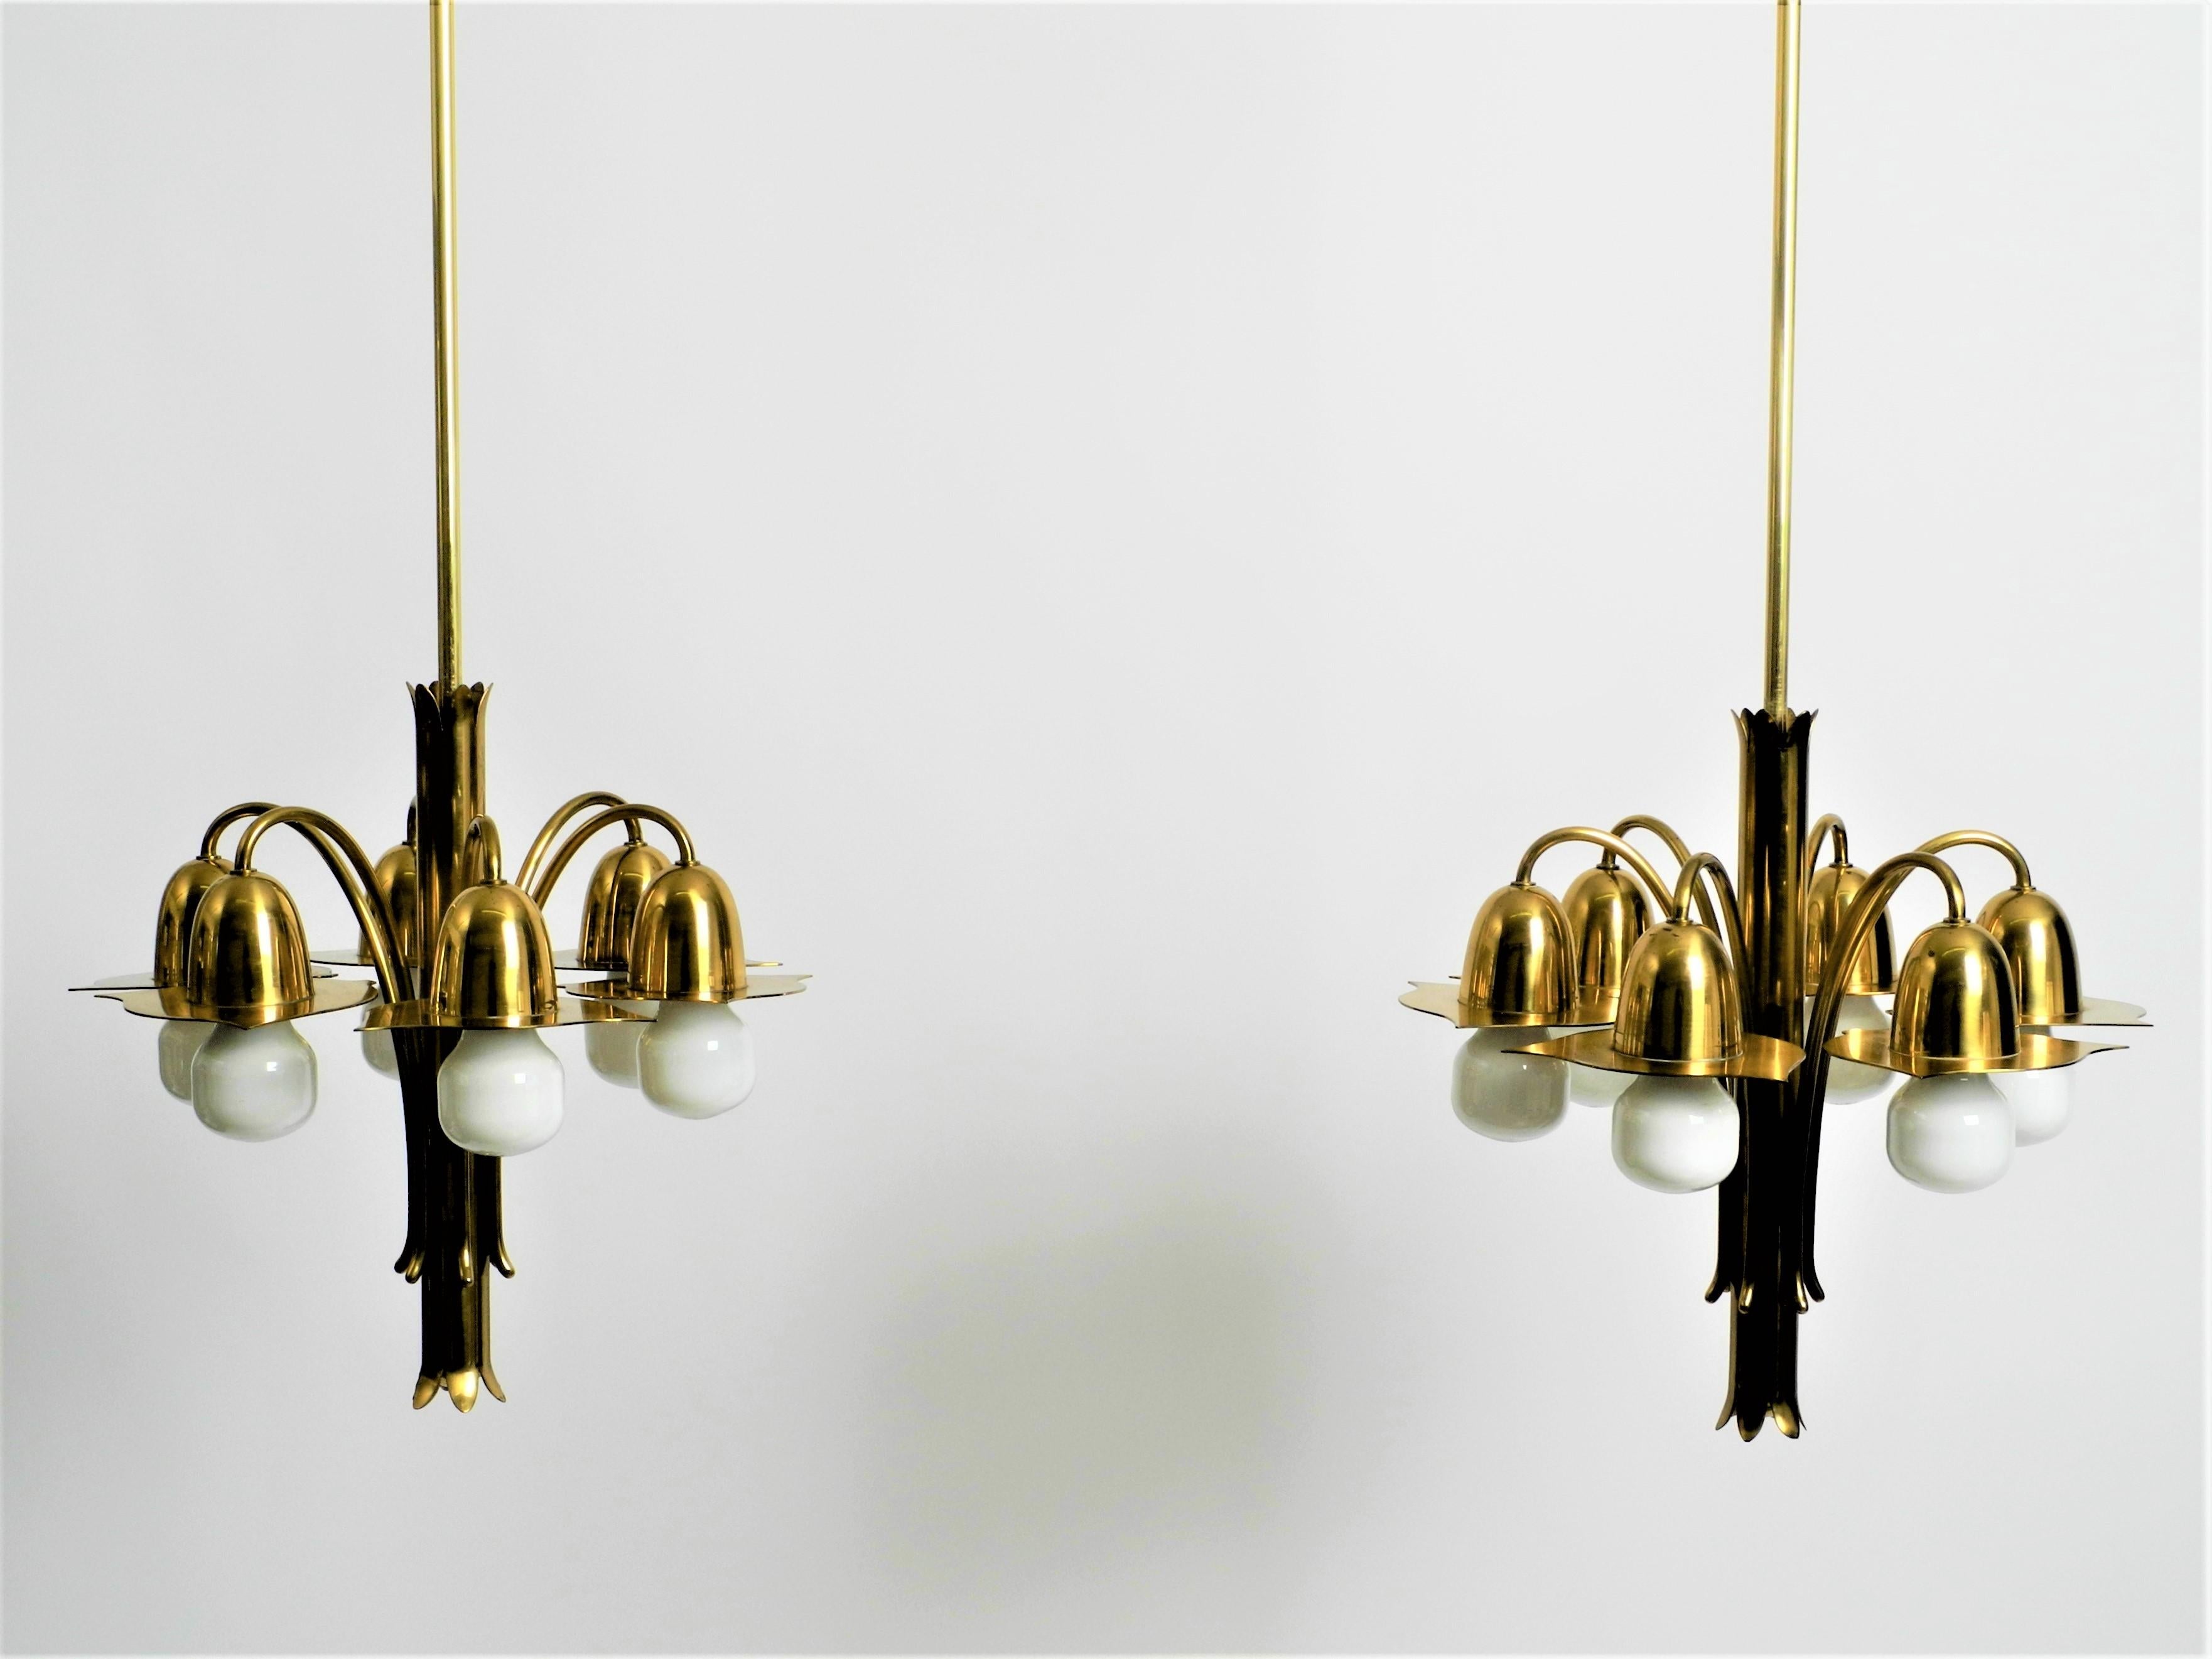 A pair of extraordinary Art Nouveau chandeliers made of brass with long brass rods. The chandeliers were designed by the Munich Art Nouveau designer Richard Riemerschmid. Until recently, both chandeliers were owned by the Riemerschmid family. 

The